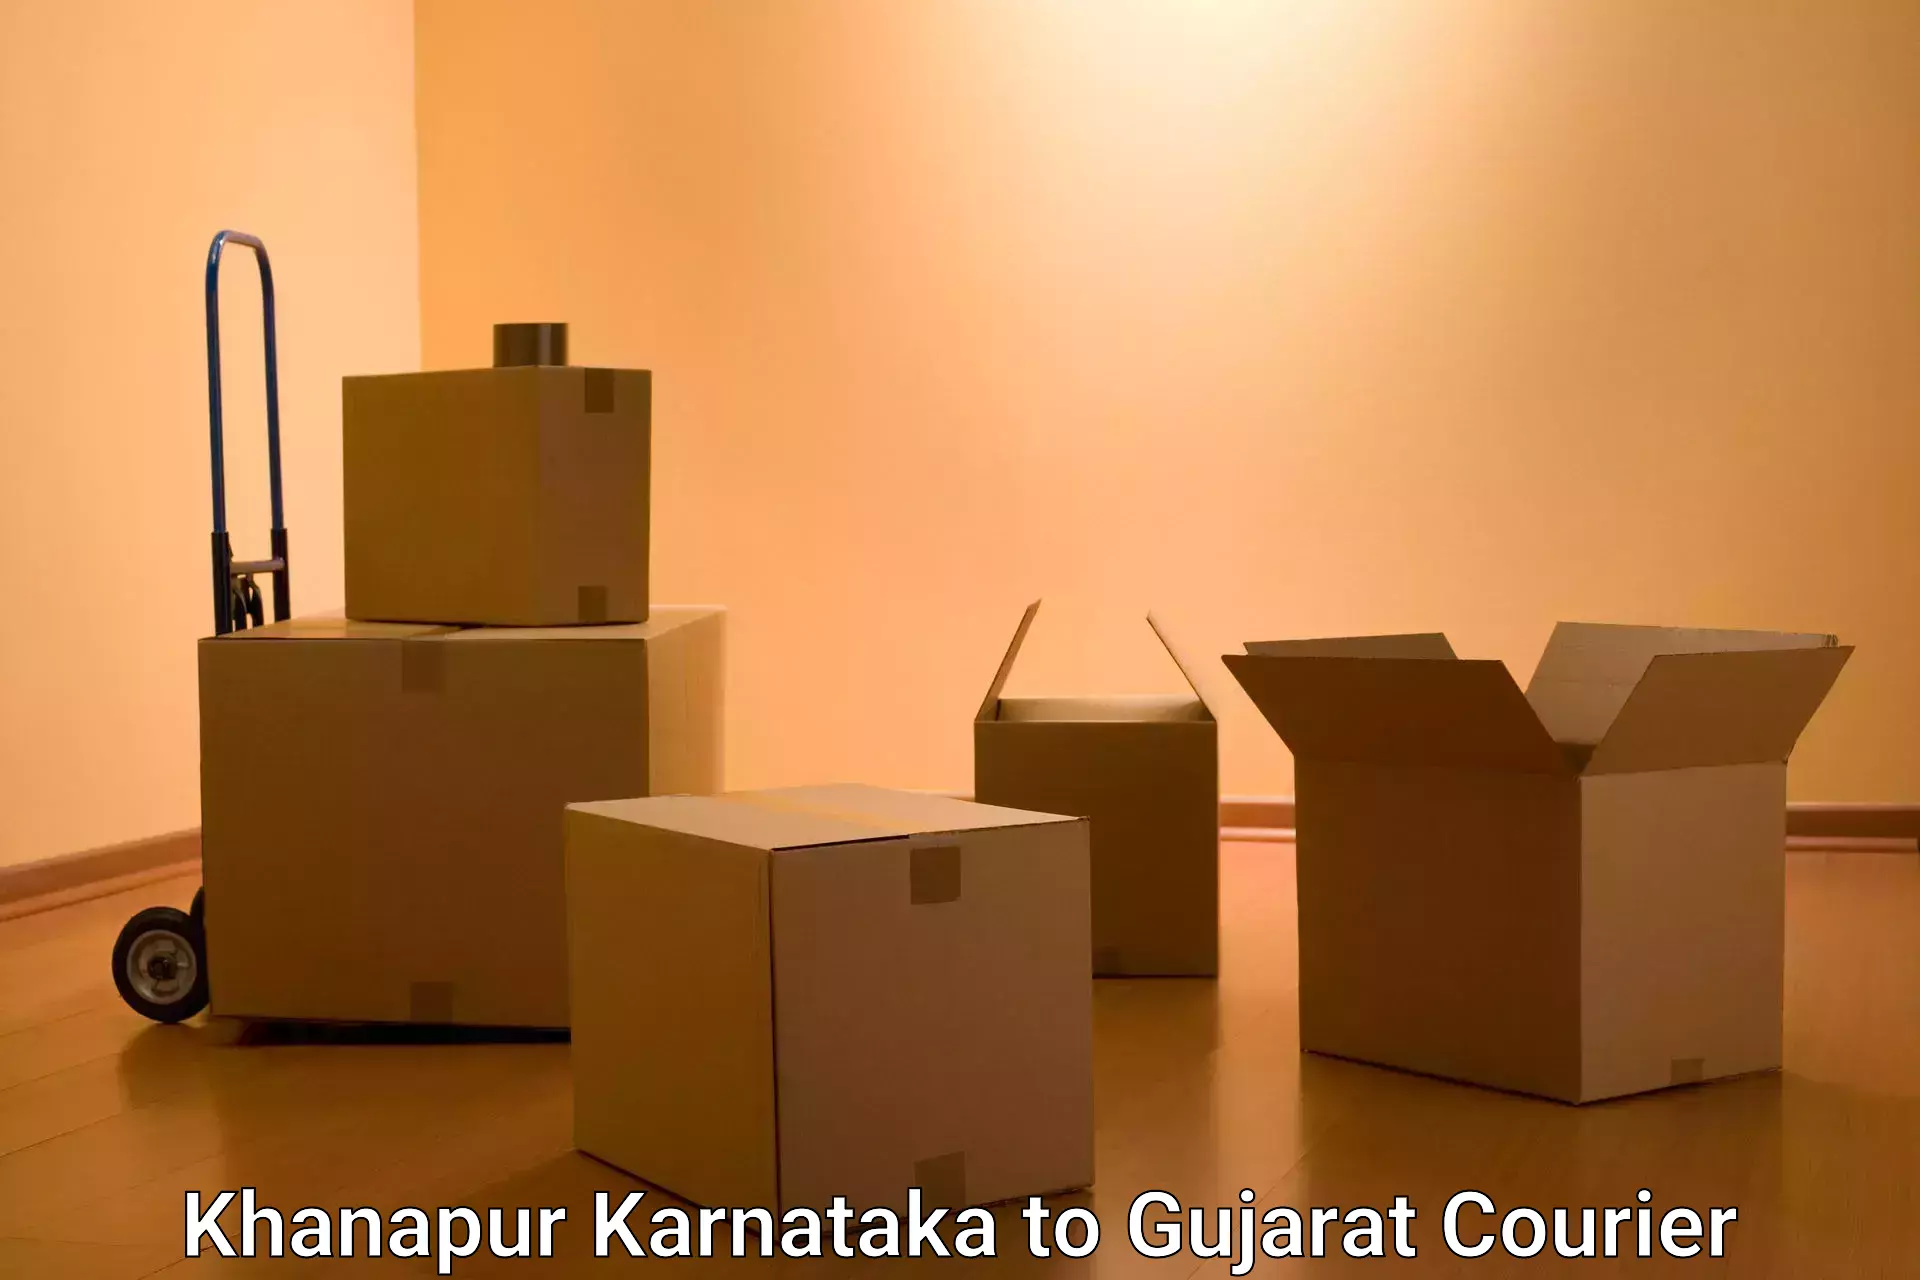 Affordable parcel service Khanapur Karnataka to Anand Agricultural University